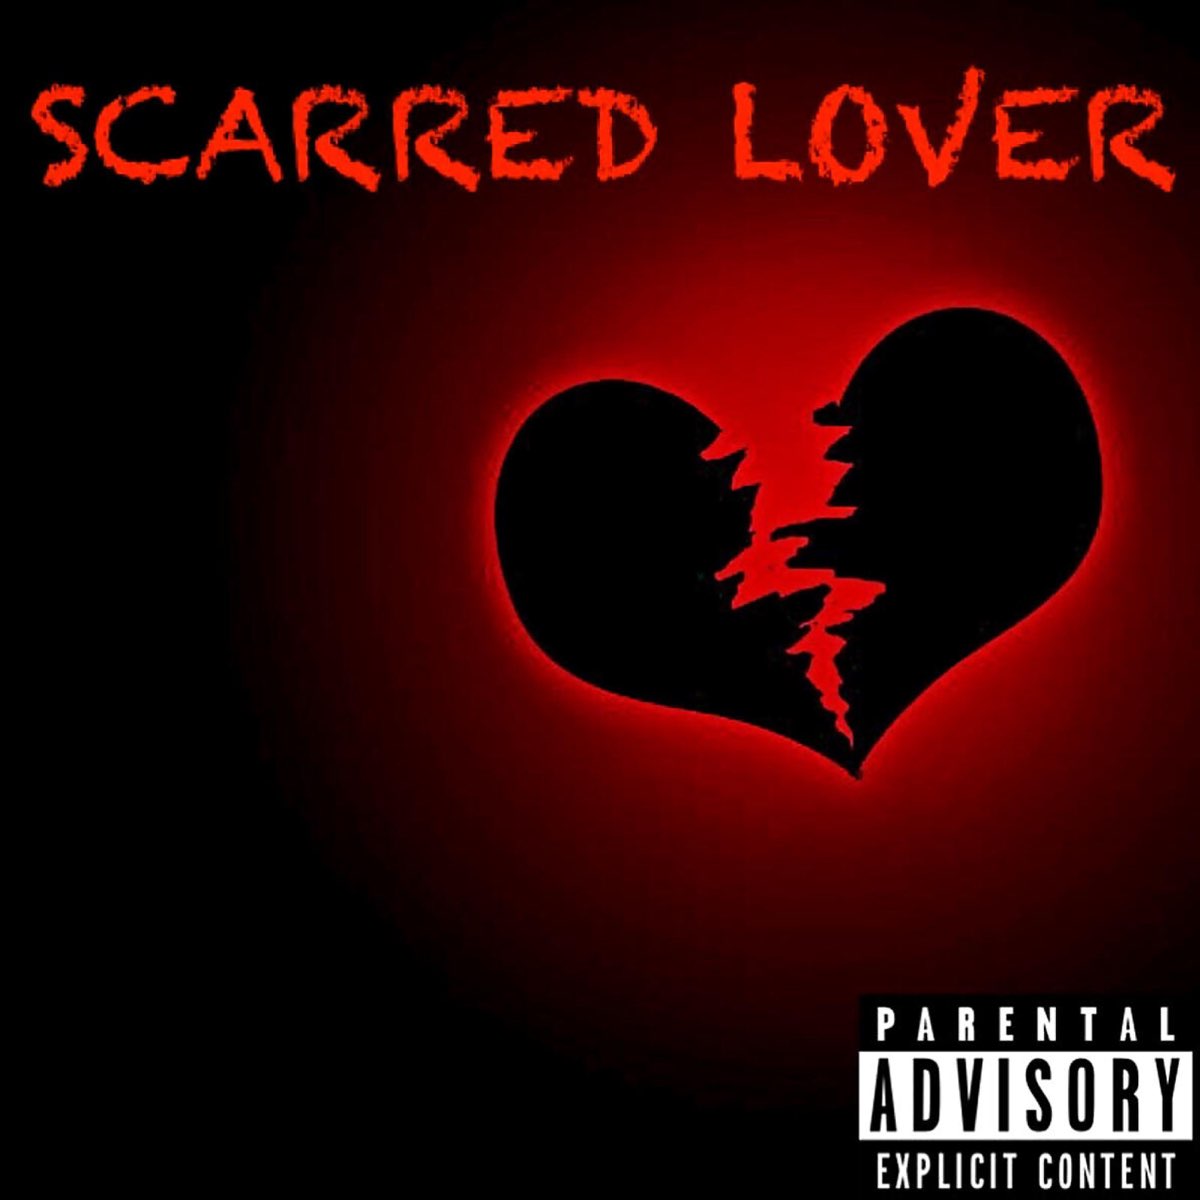 Scary Love. Love scars 4. Scare l